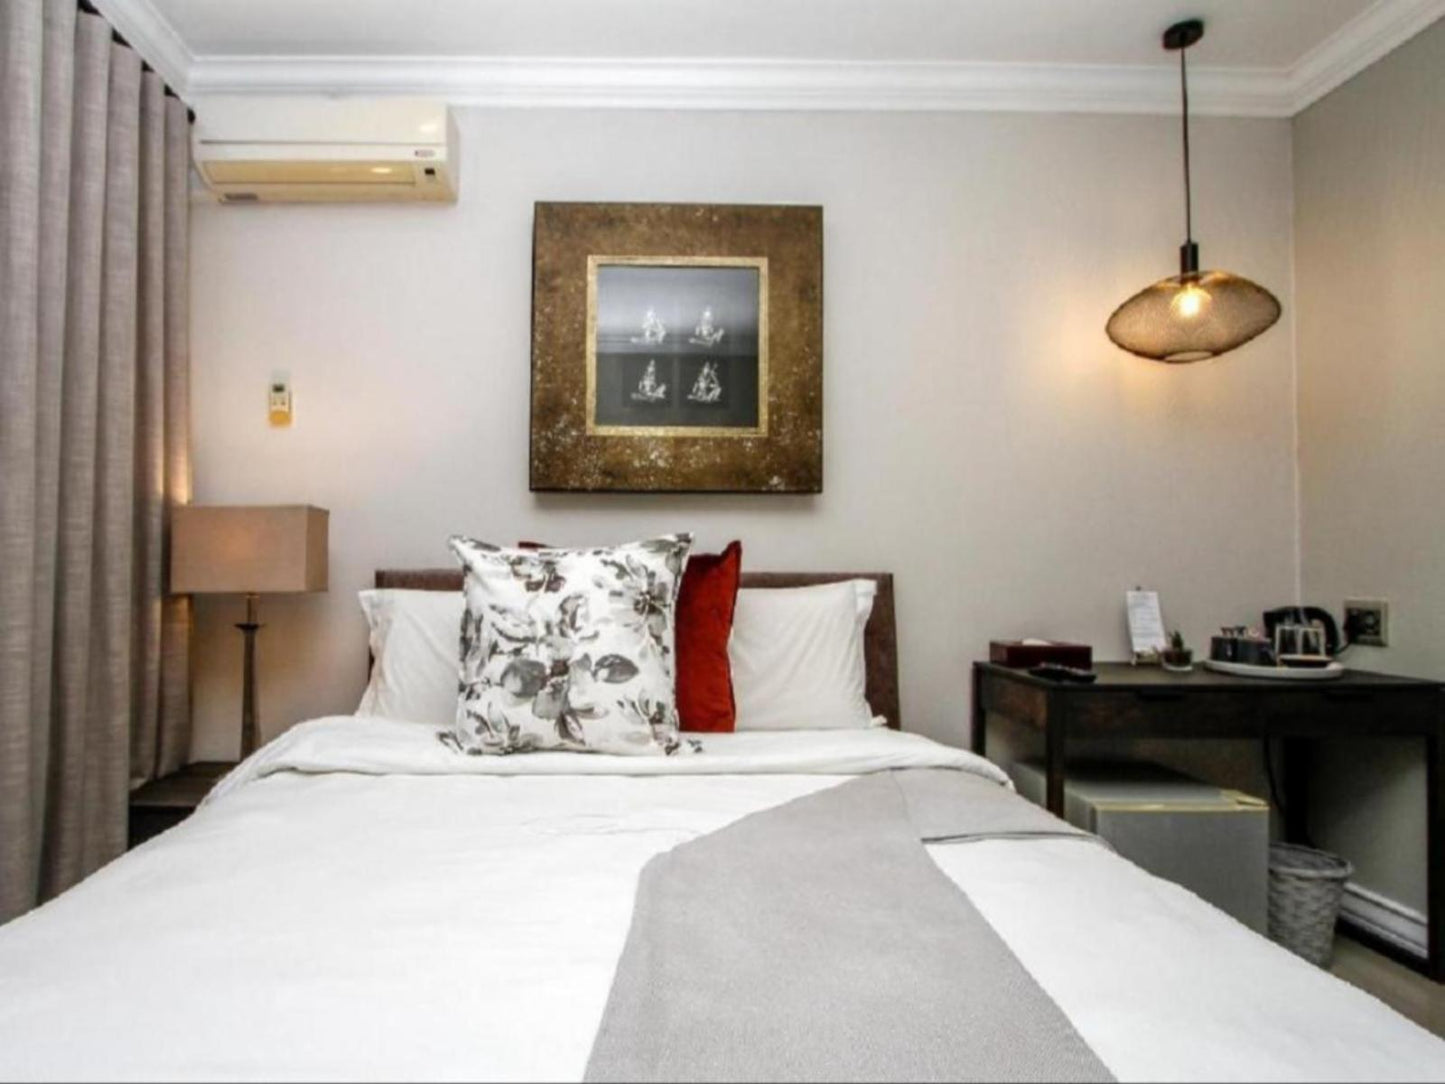 Standard Room @ Sanchia Luxury Guesthouse